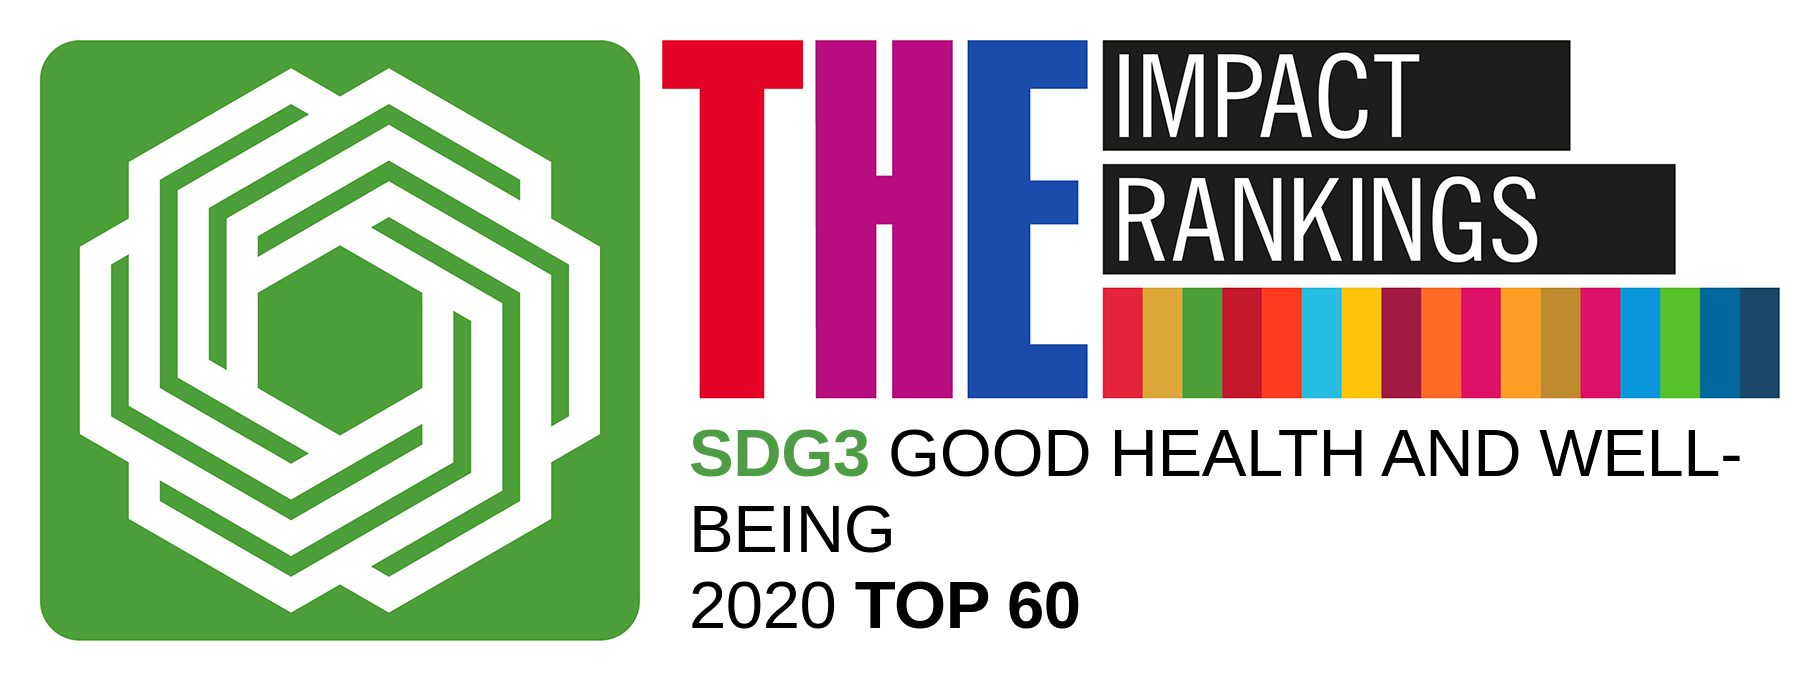 SDG3_Good_Health_Wellbeing_Top_60.png